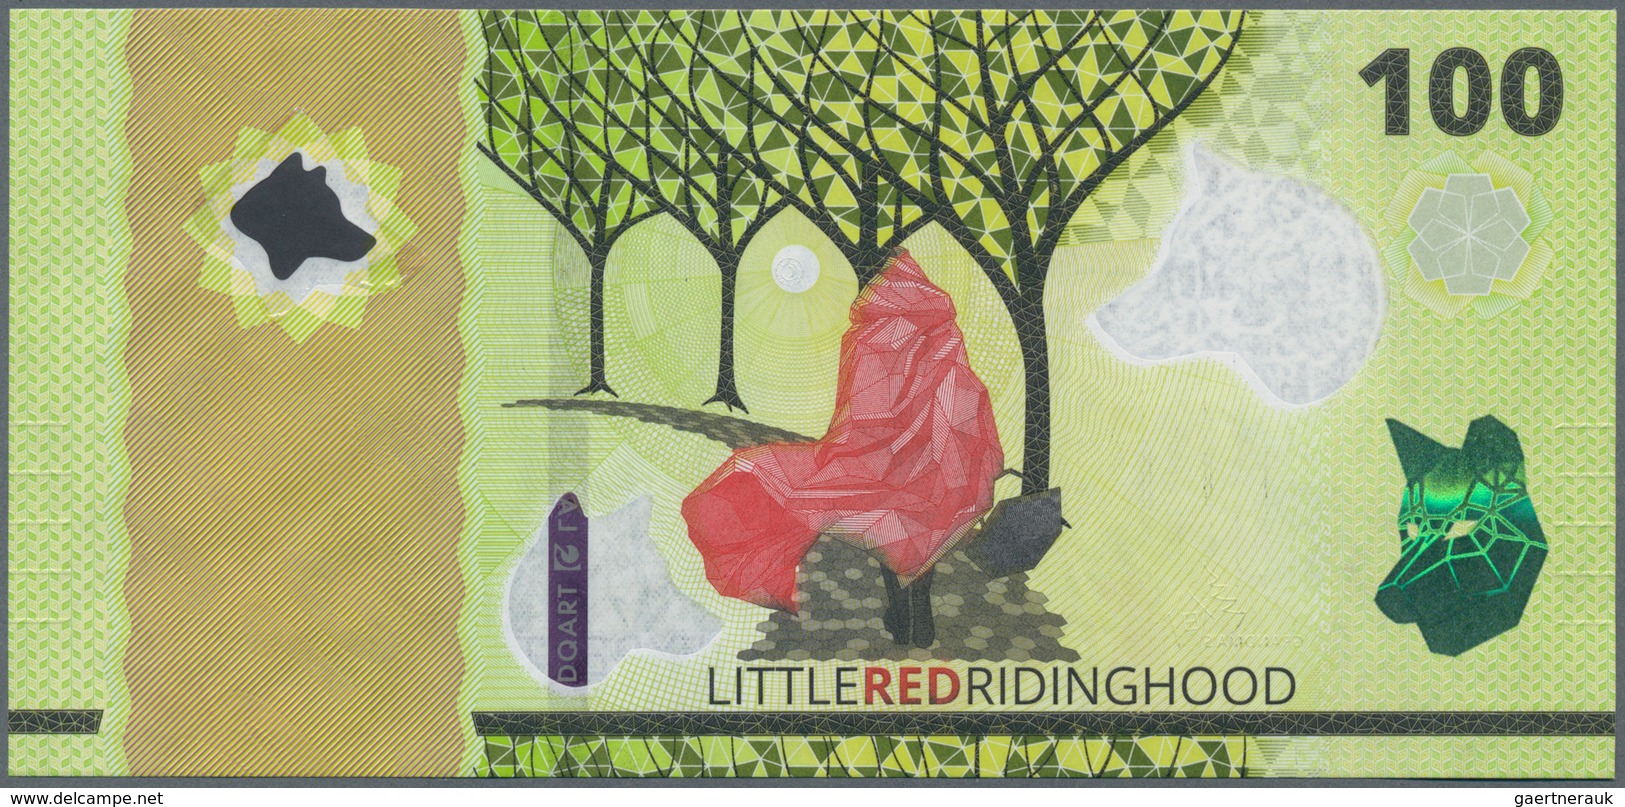 Testbanknoten: HYBRID Test Note "100 Little Red Ridinghood" On Durasafe Substrate By Landqart Switze - Ficción & Especímenes